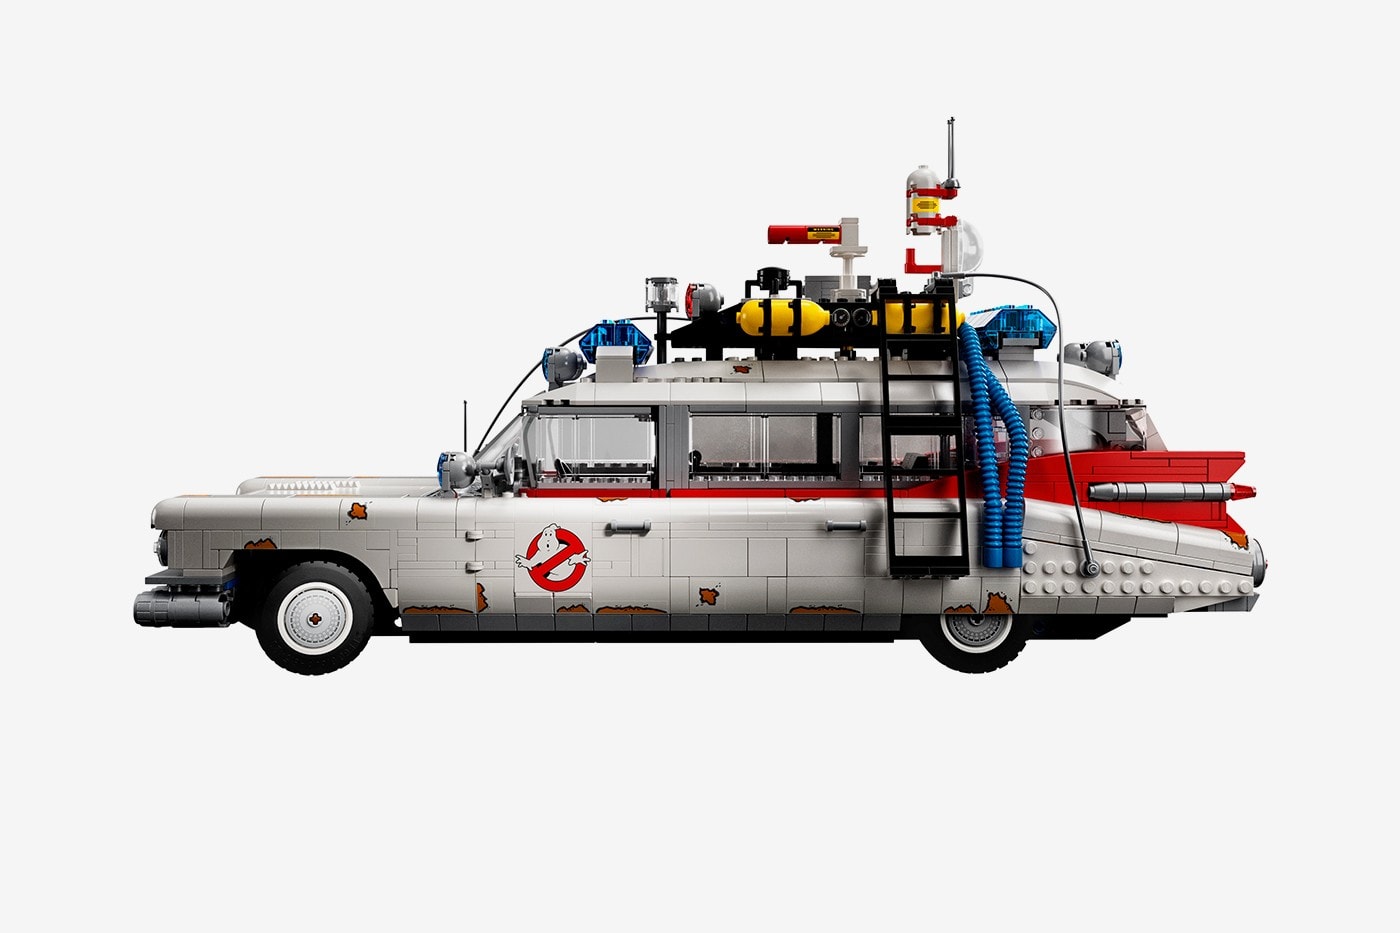 Day 08 送出：LEGO® Ghostbuster™ ECTO《捉鬼敢死隊》戰車模型